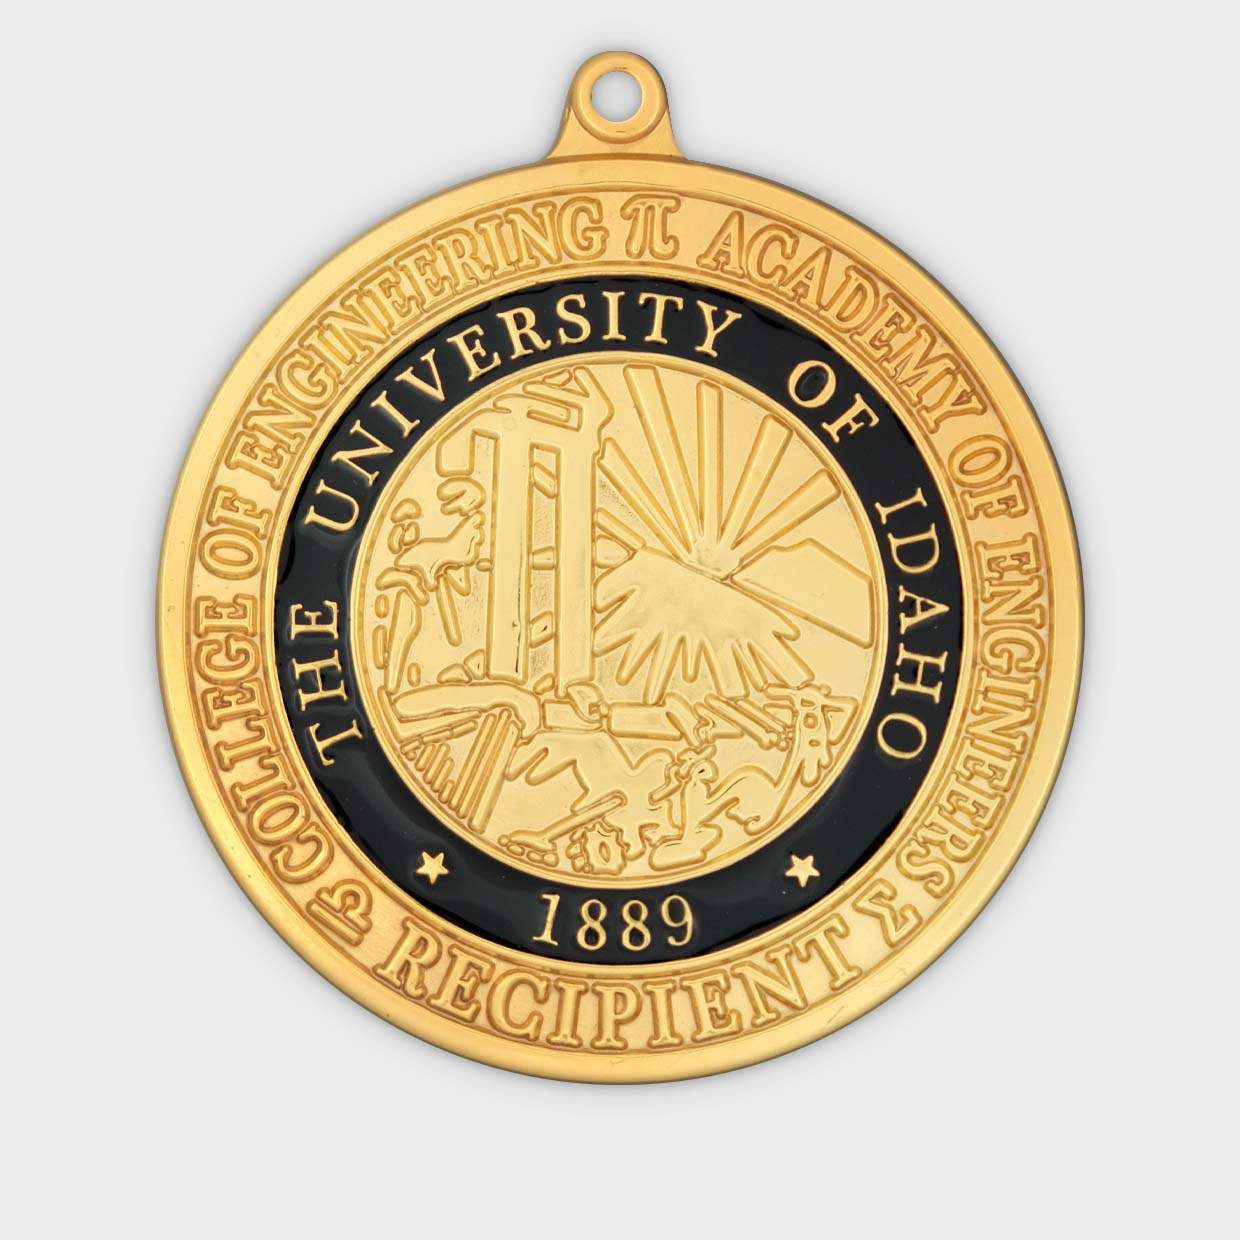 College of Engineering Academy of Engineers Medal Obverse